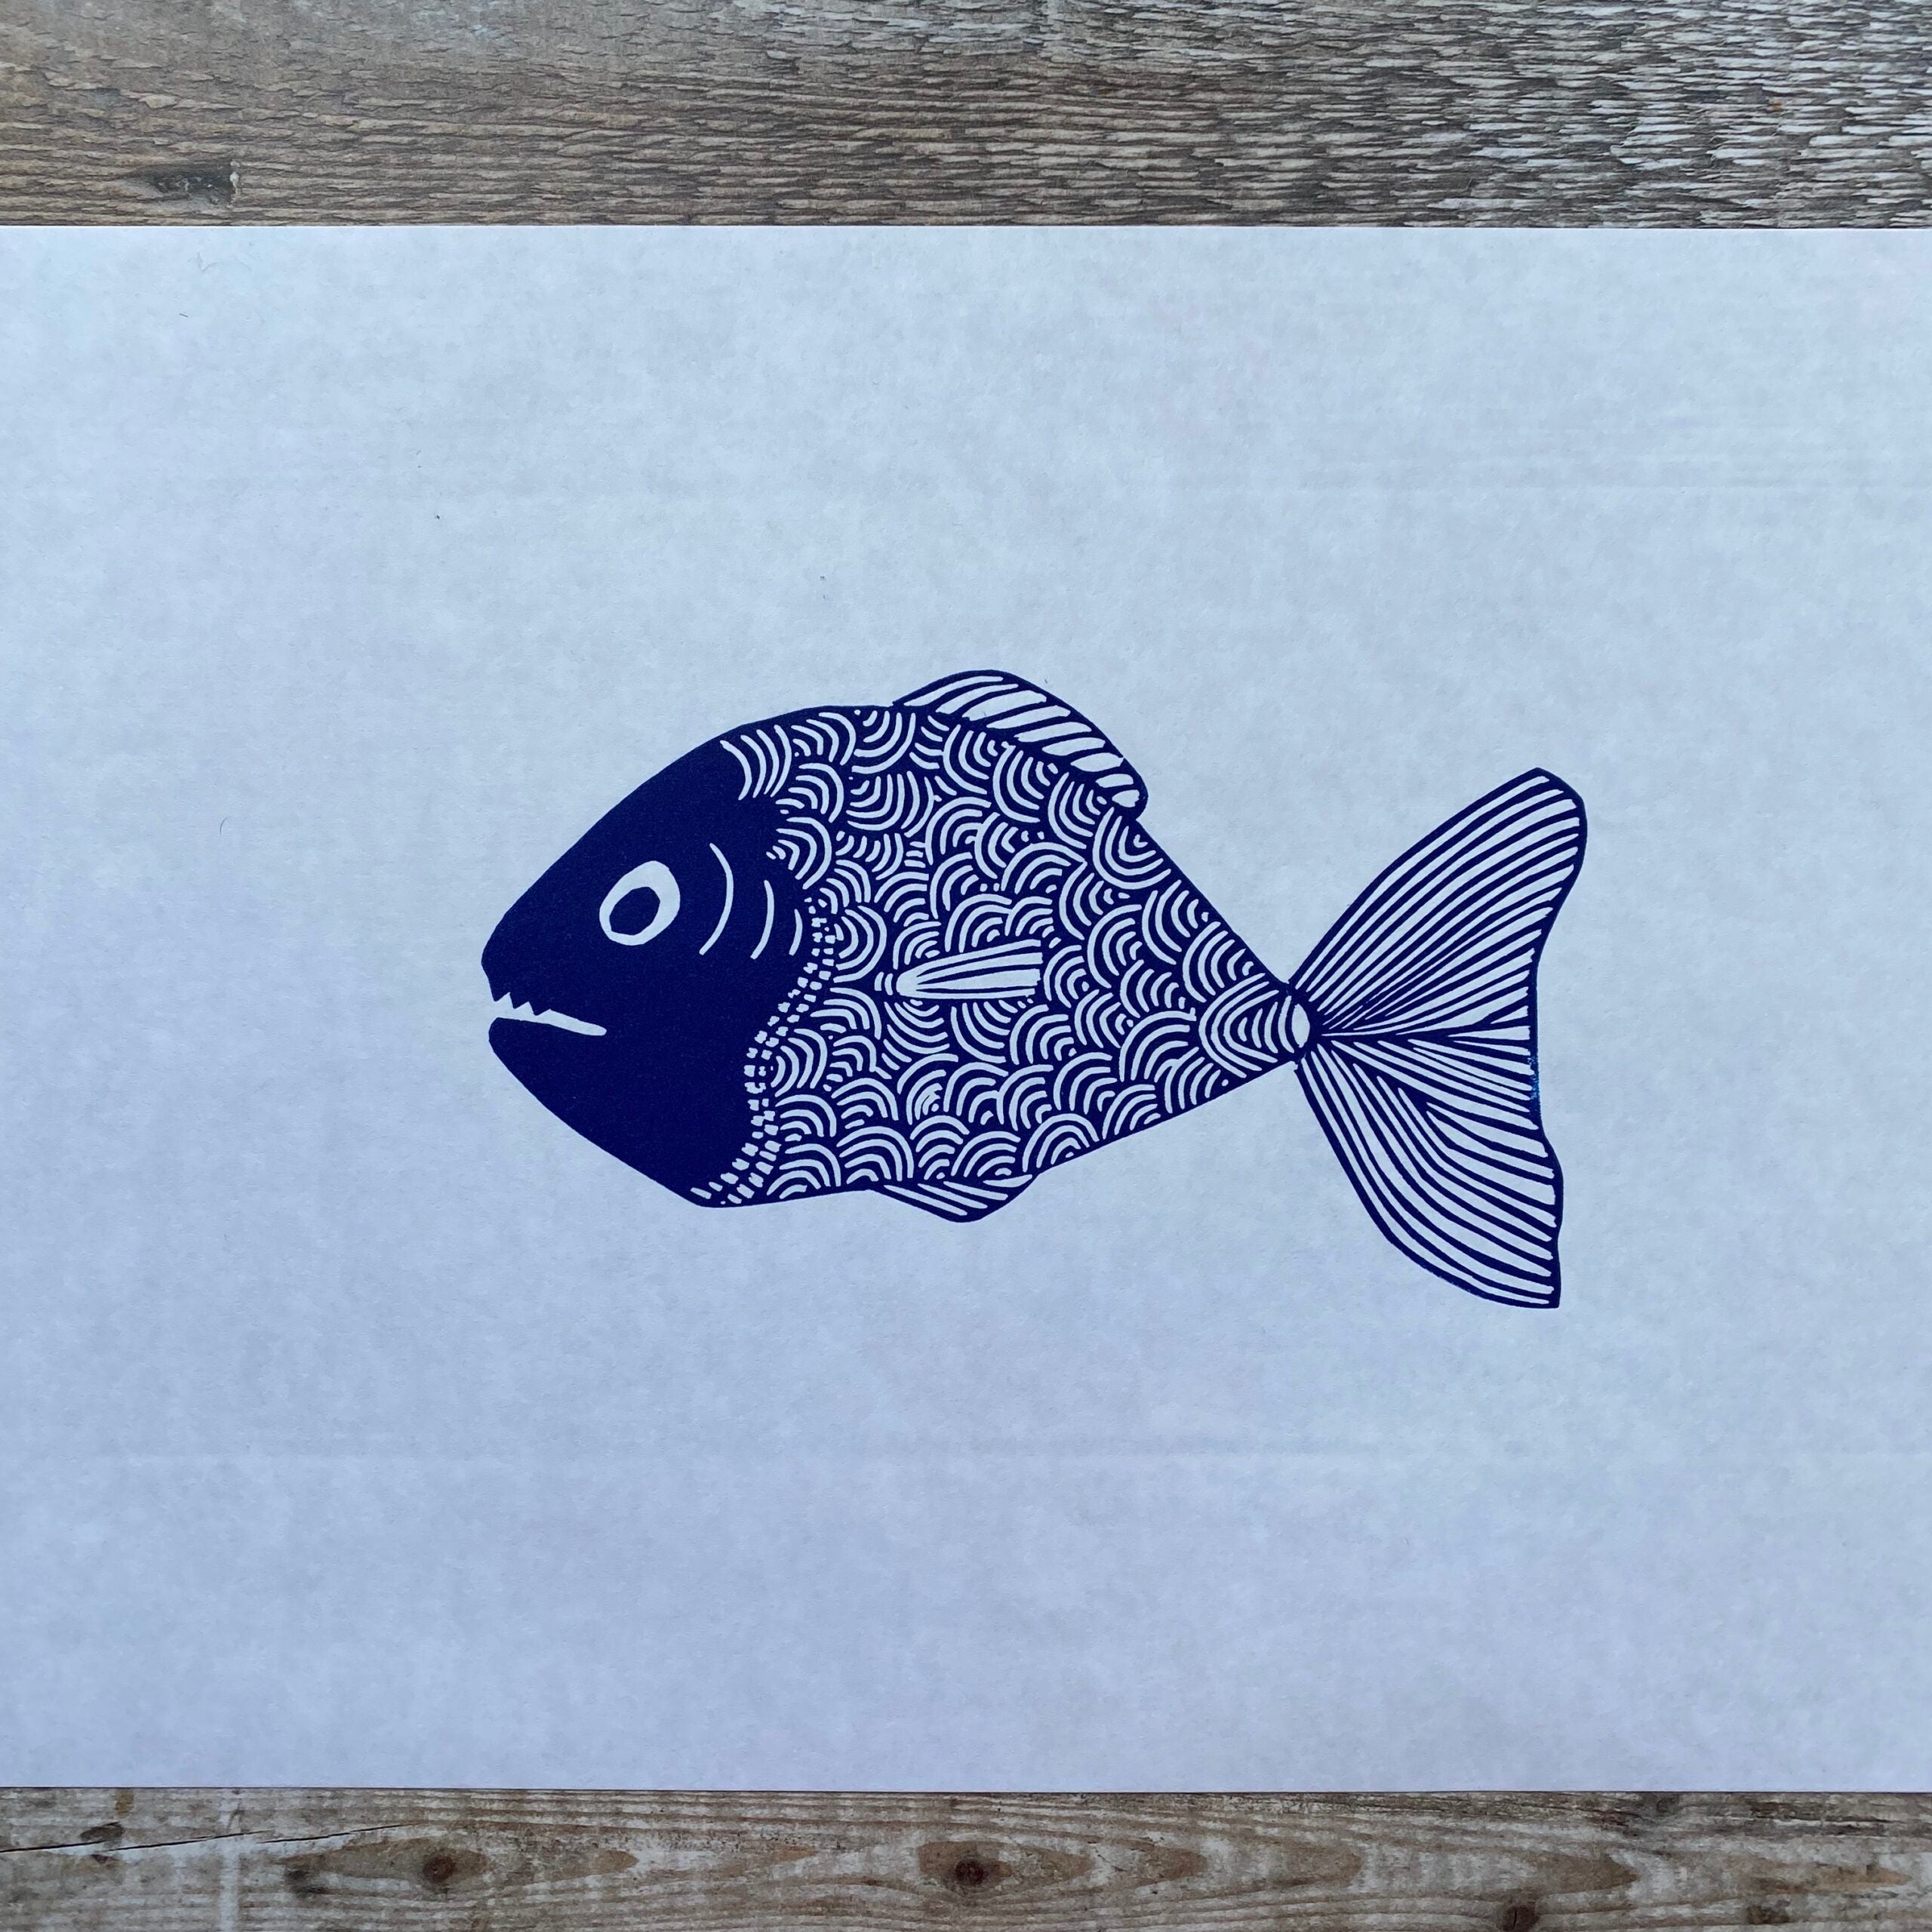 Little Nipper Fish - Original Linocut Print